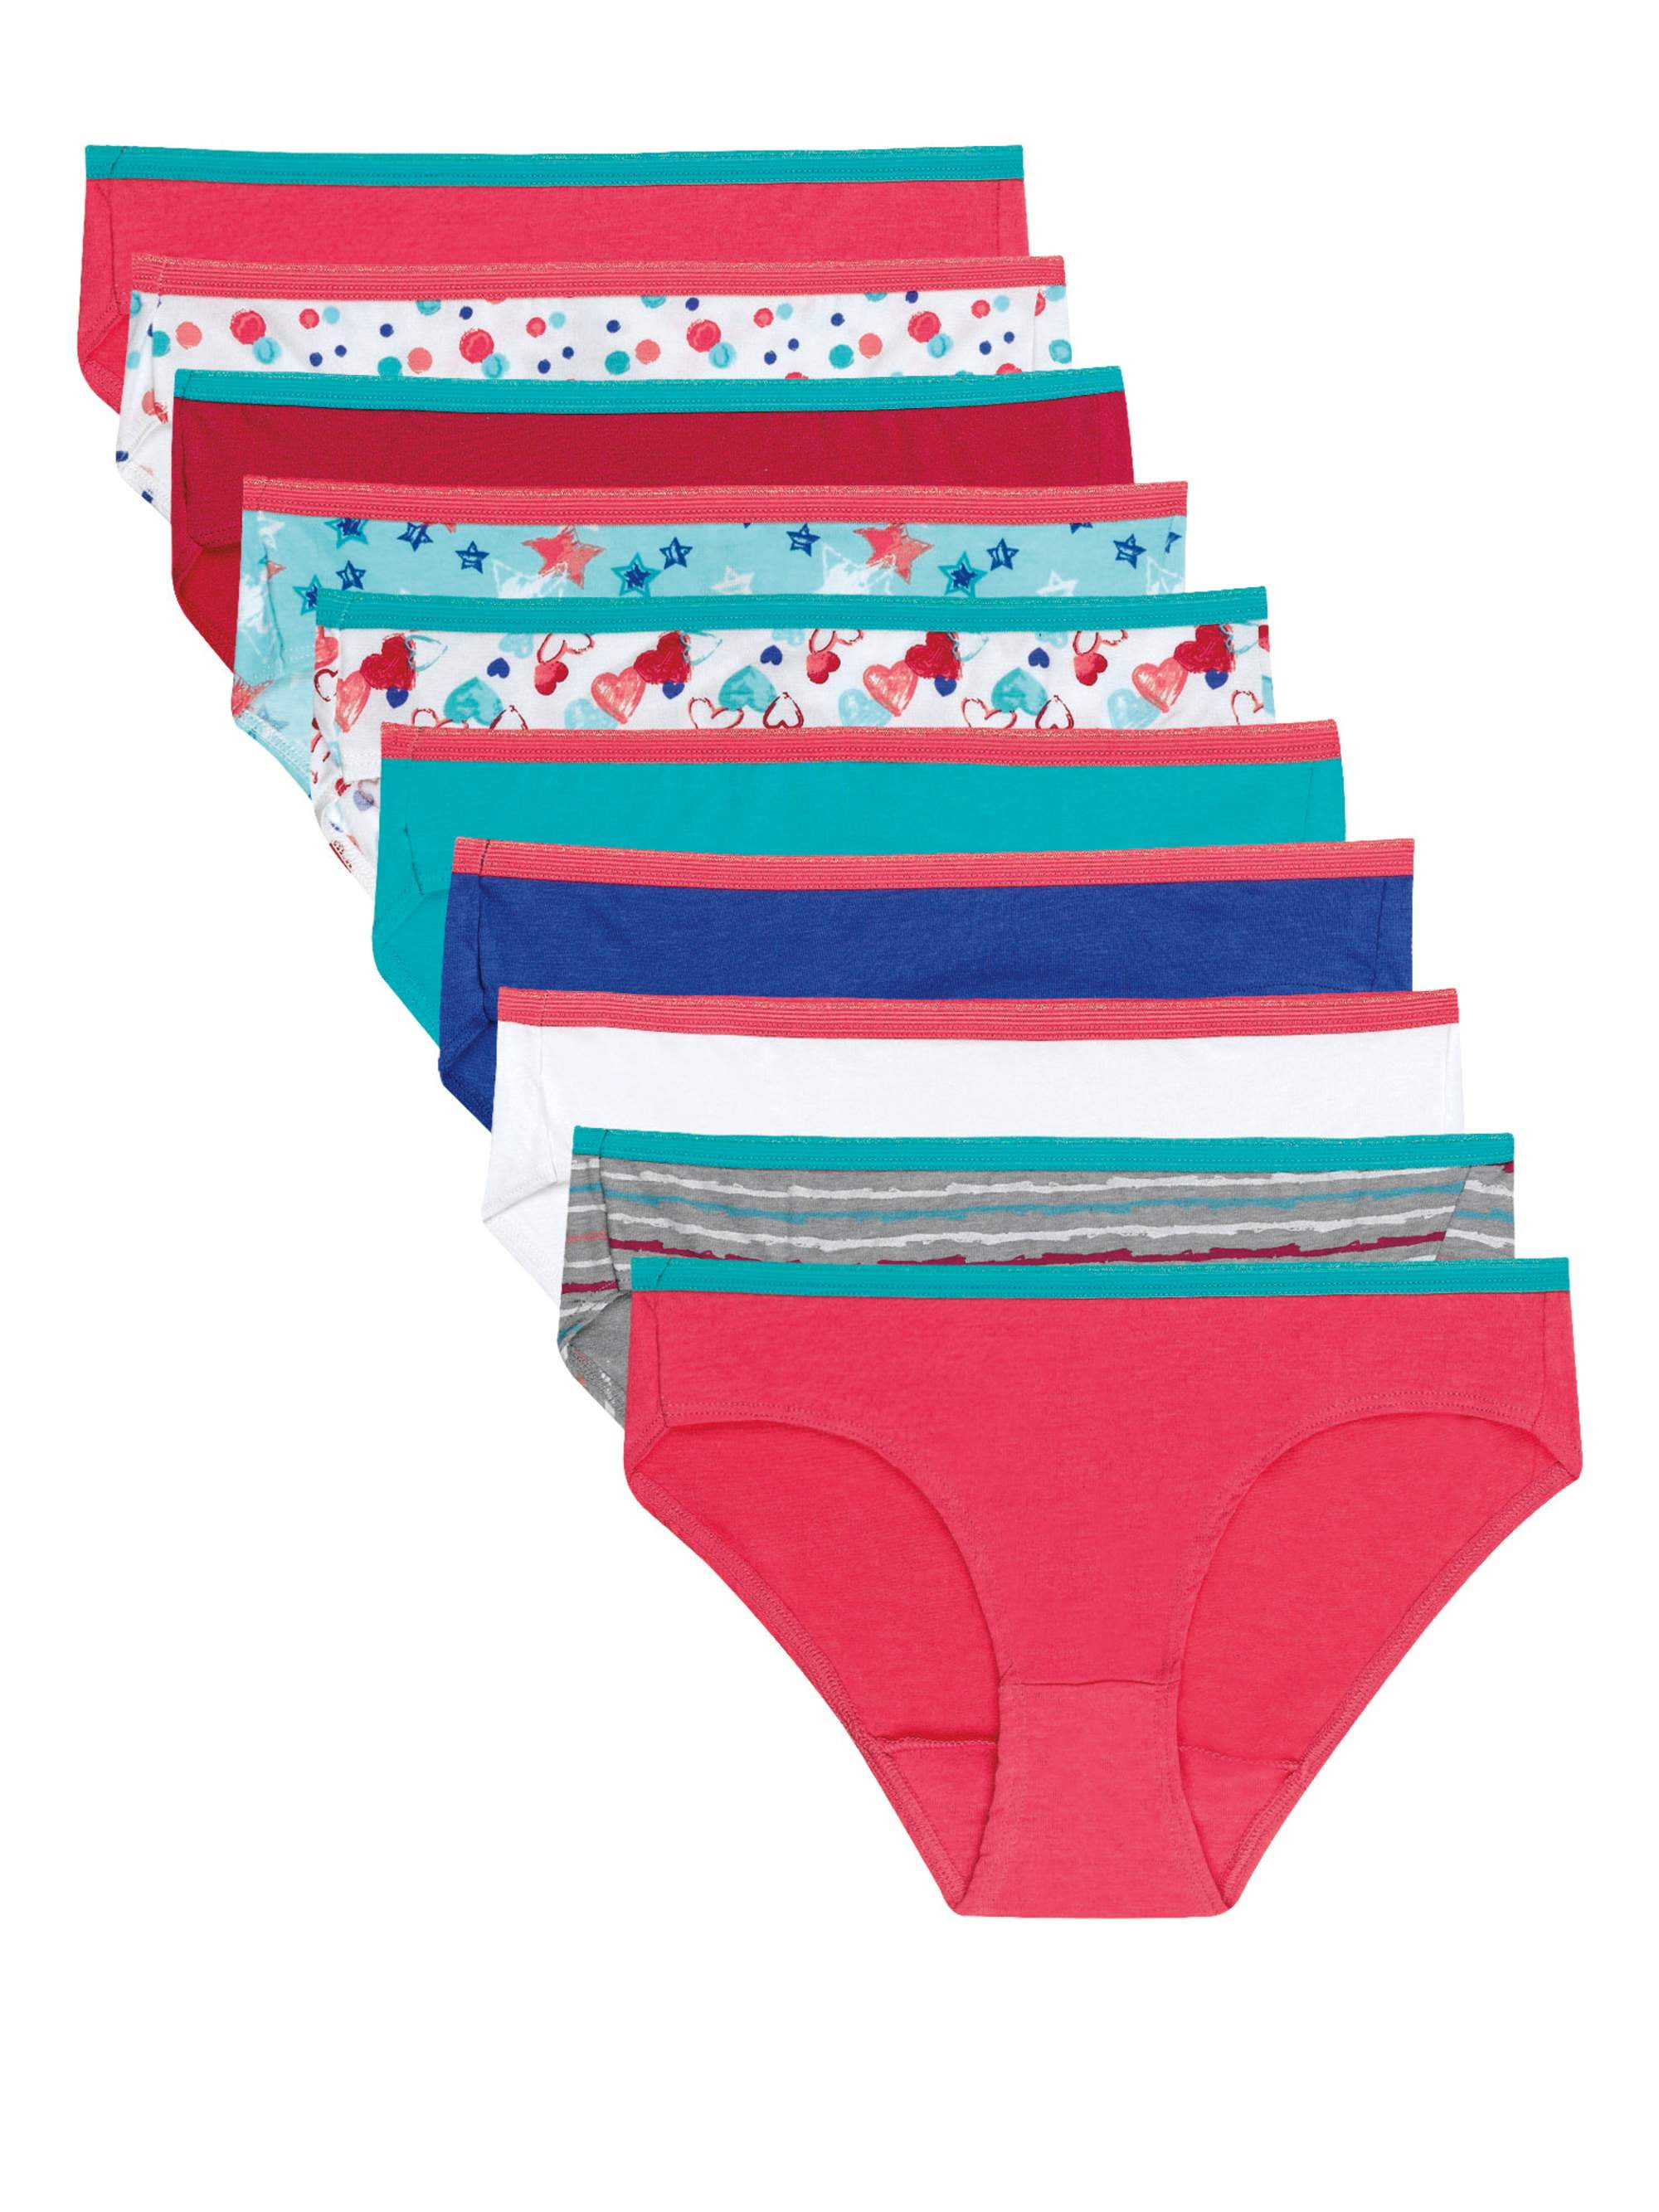 10-PACK Hanes Panties Girls Sz 10 Assorted Underwear 100% Cotton Multicolor  NWOT